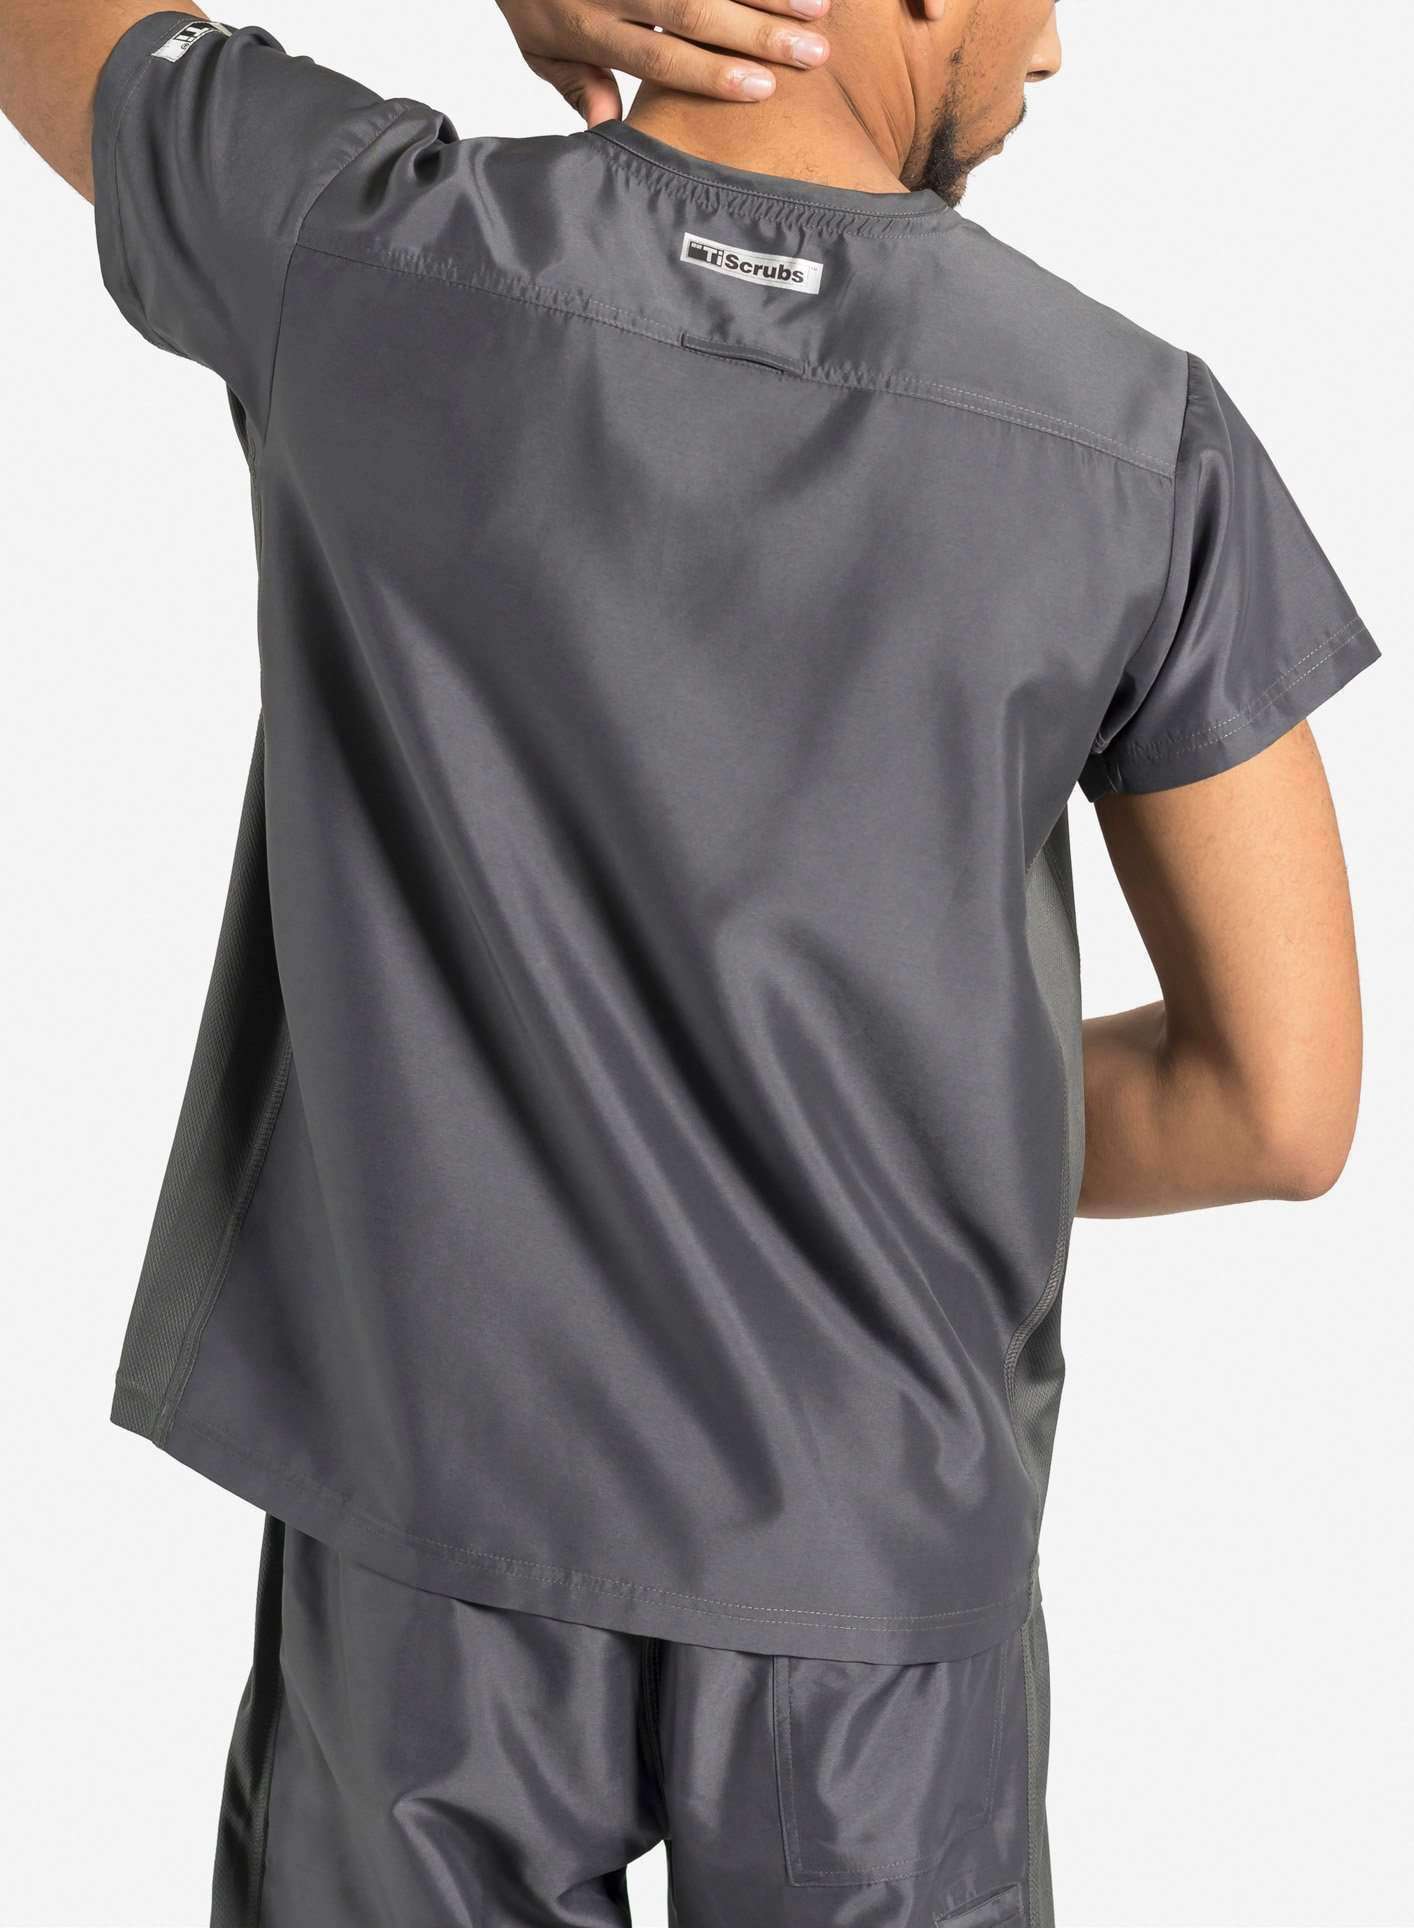 mens Elements short sleeve classic one pocket scrub top dark gray